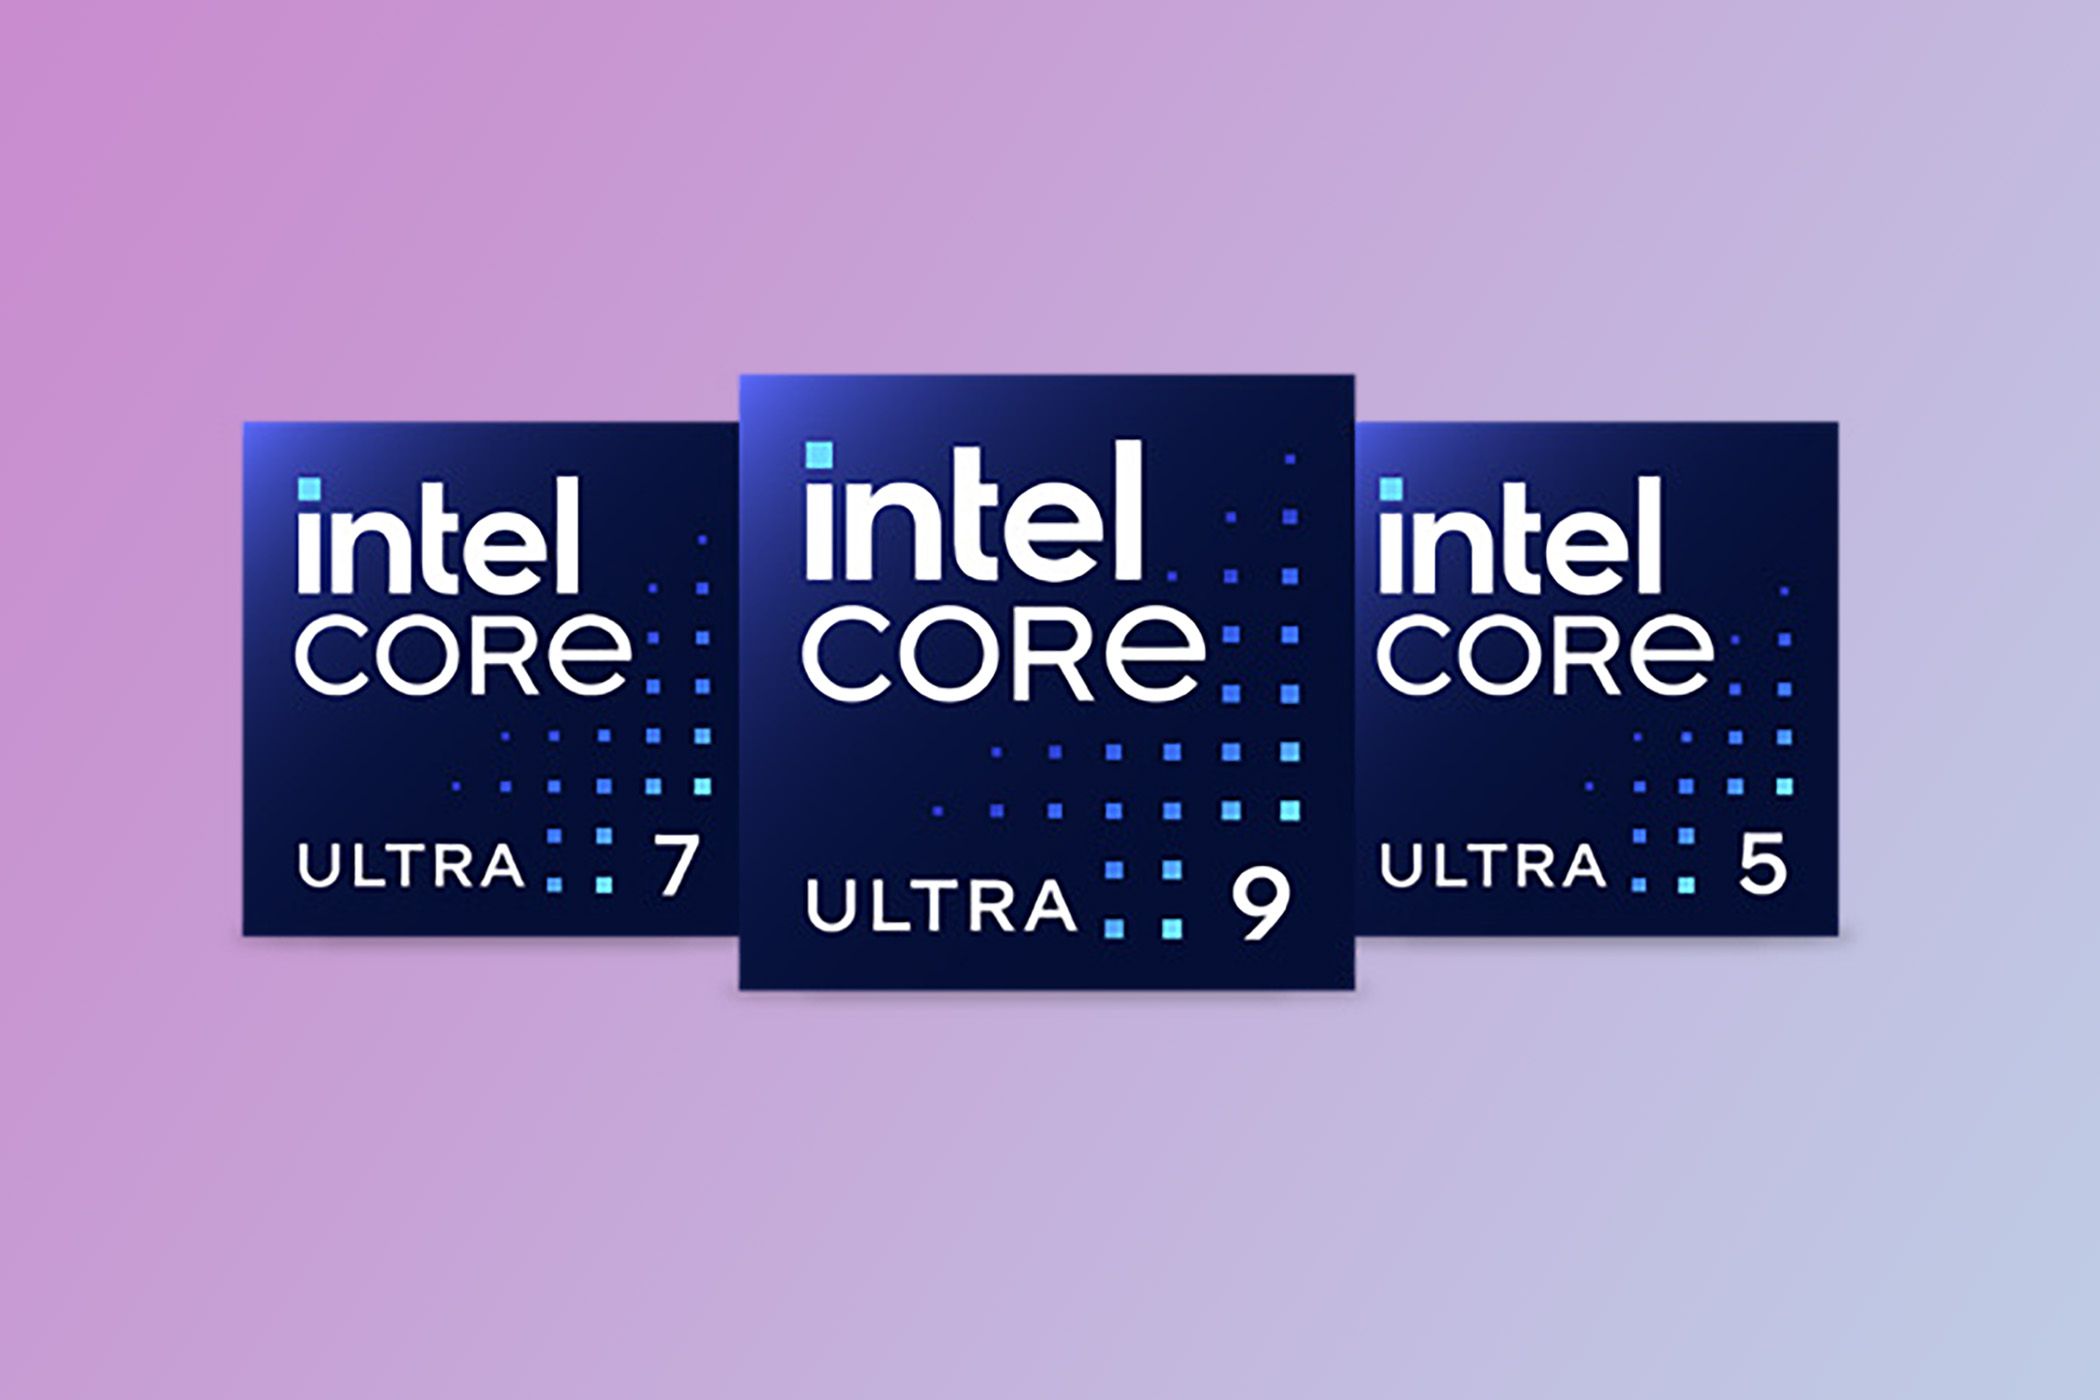 Intel Core Ultra 5, Ultra 7, and Ultra 9 processors